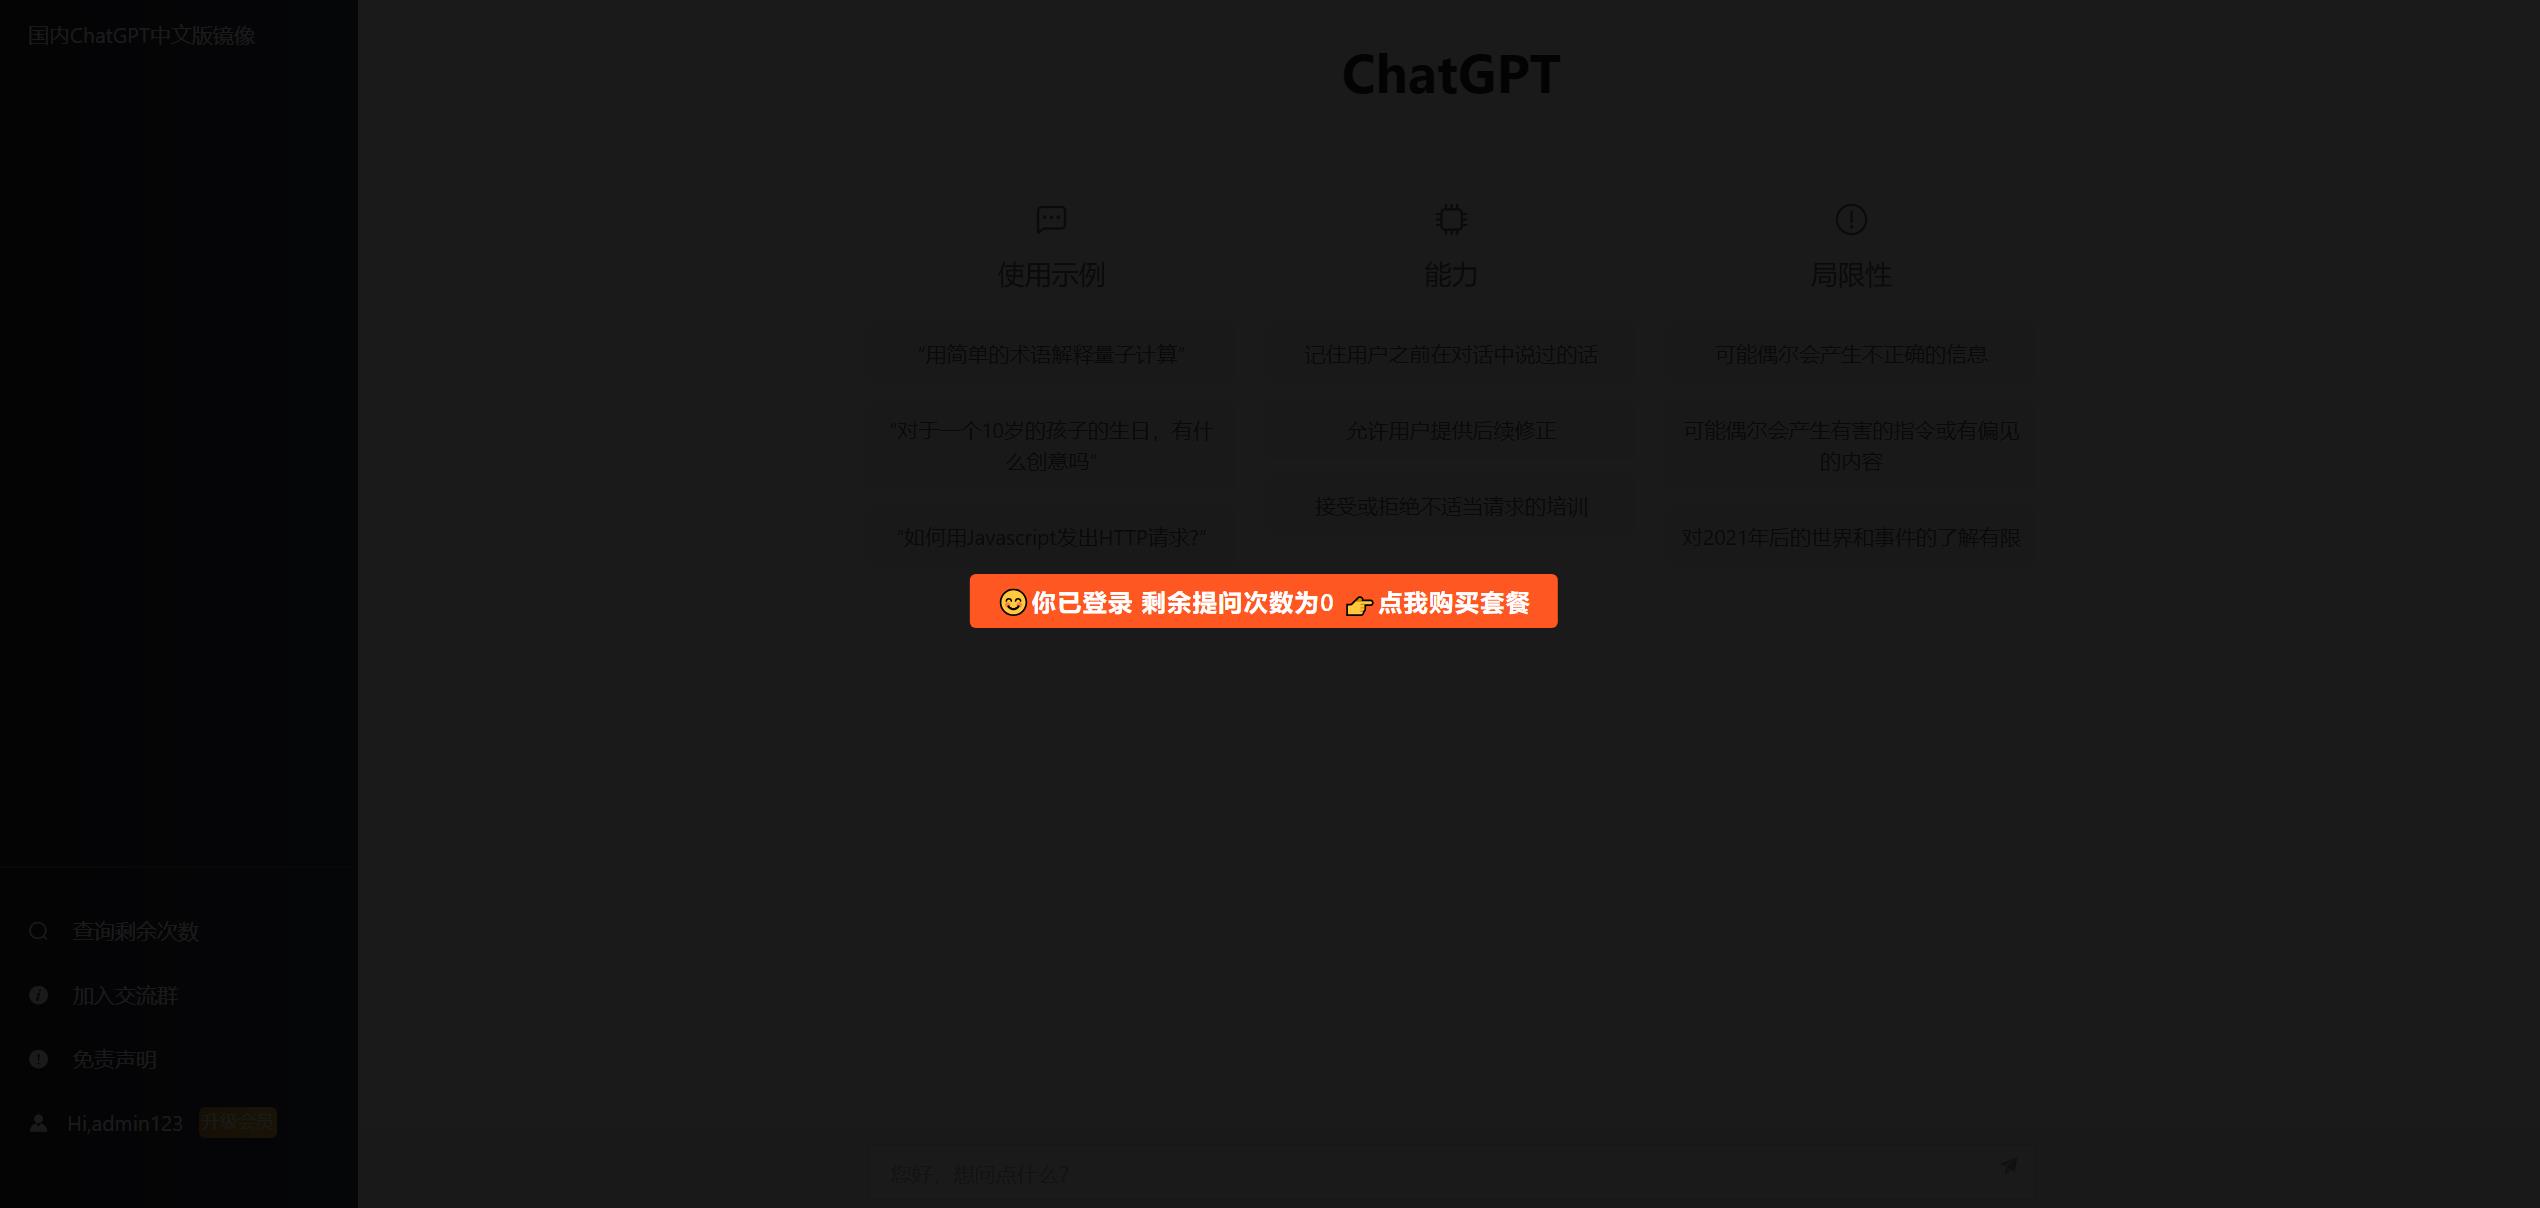 B0193-2023最新ChatGPT网站源码发布 支持用户付费套餐并能够赚取收益-图[1]